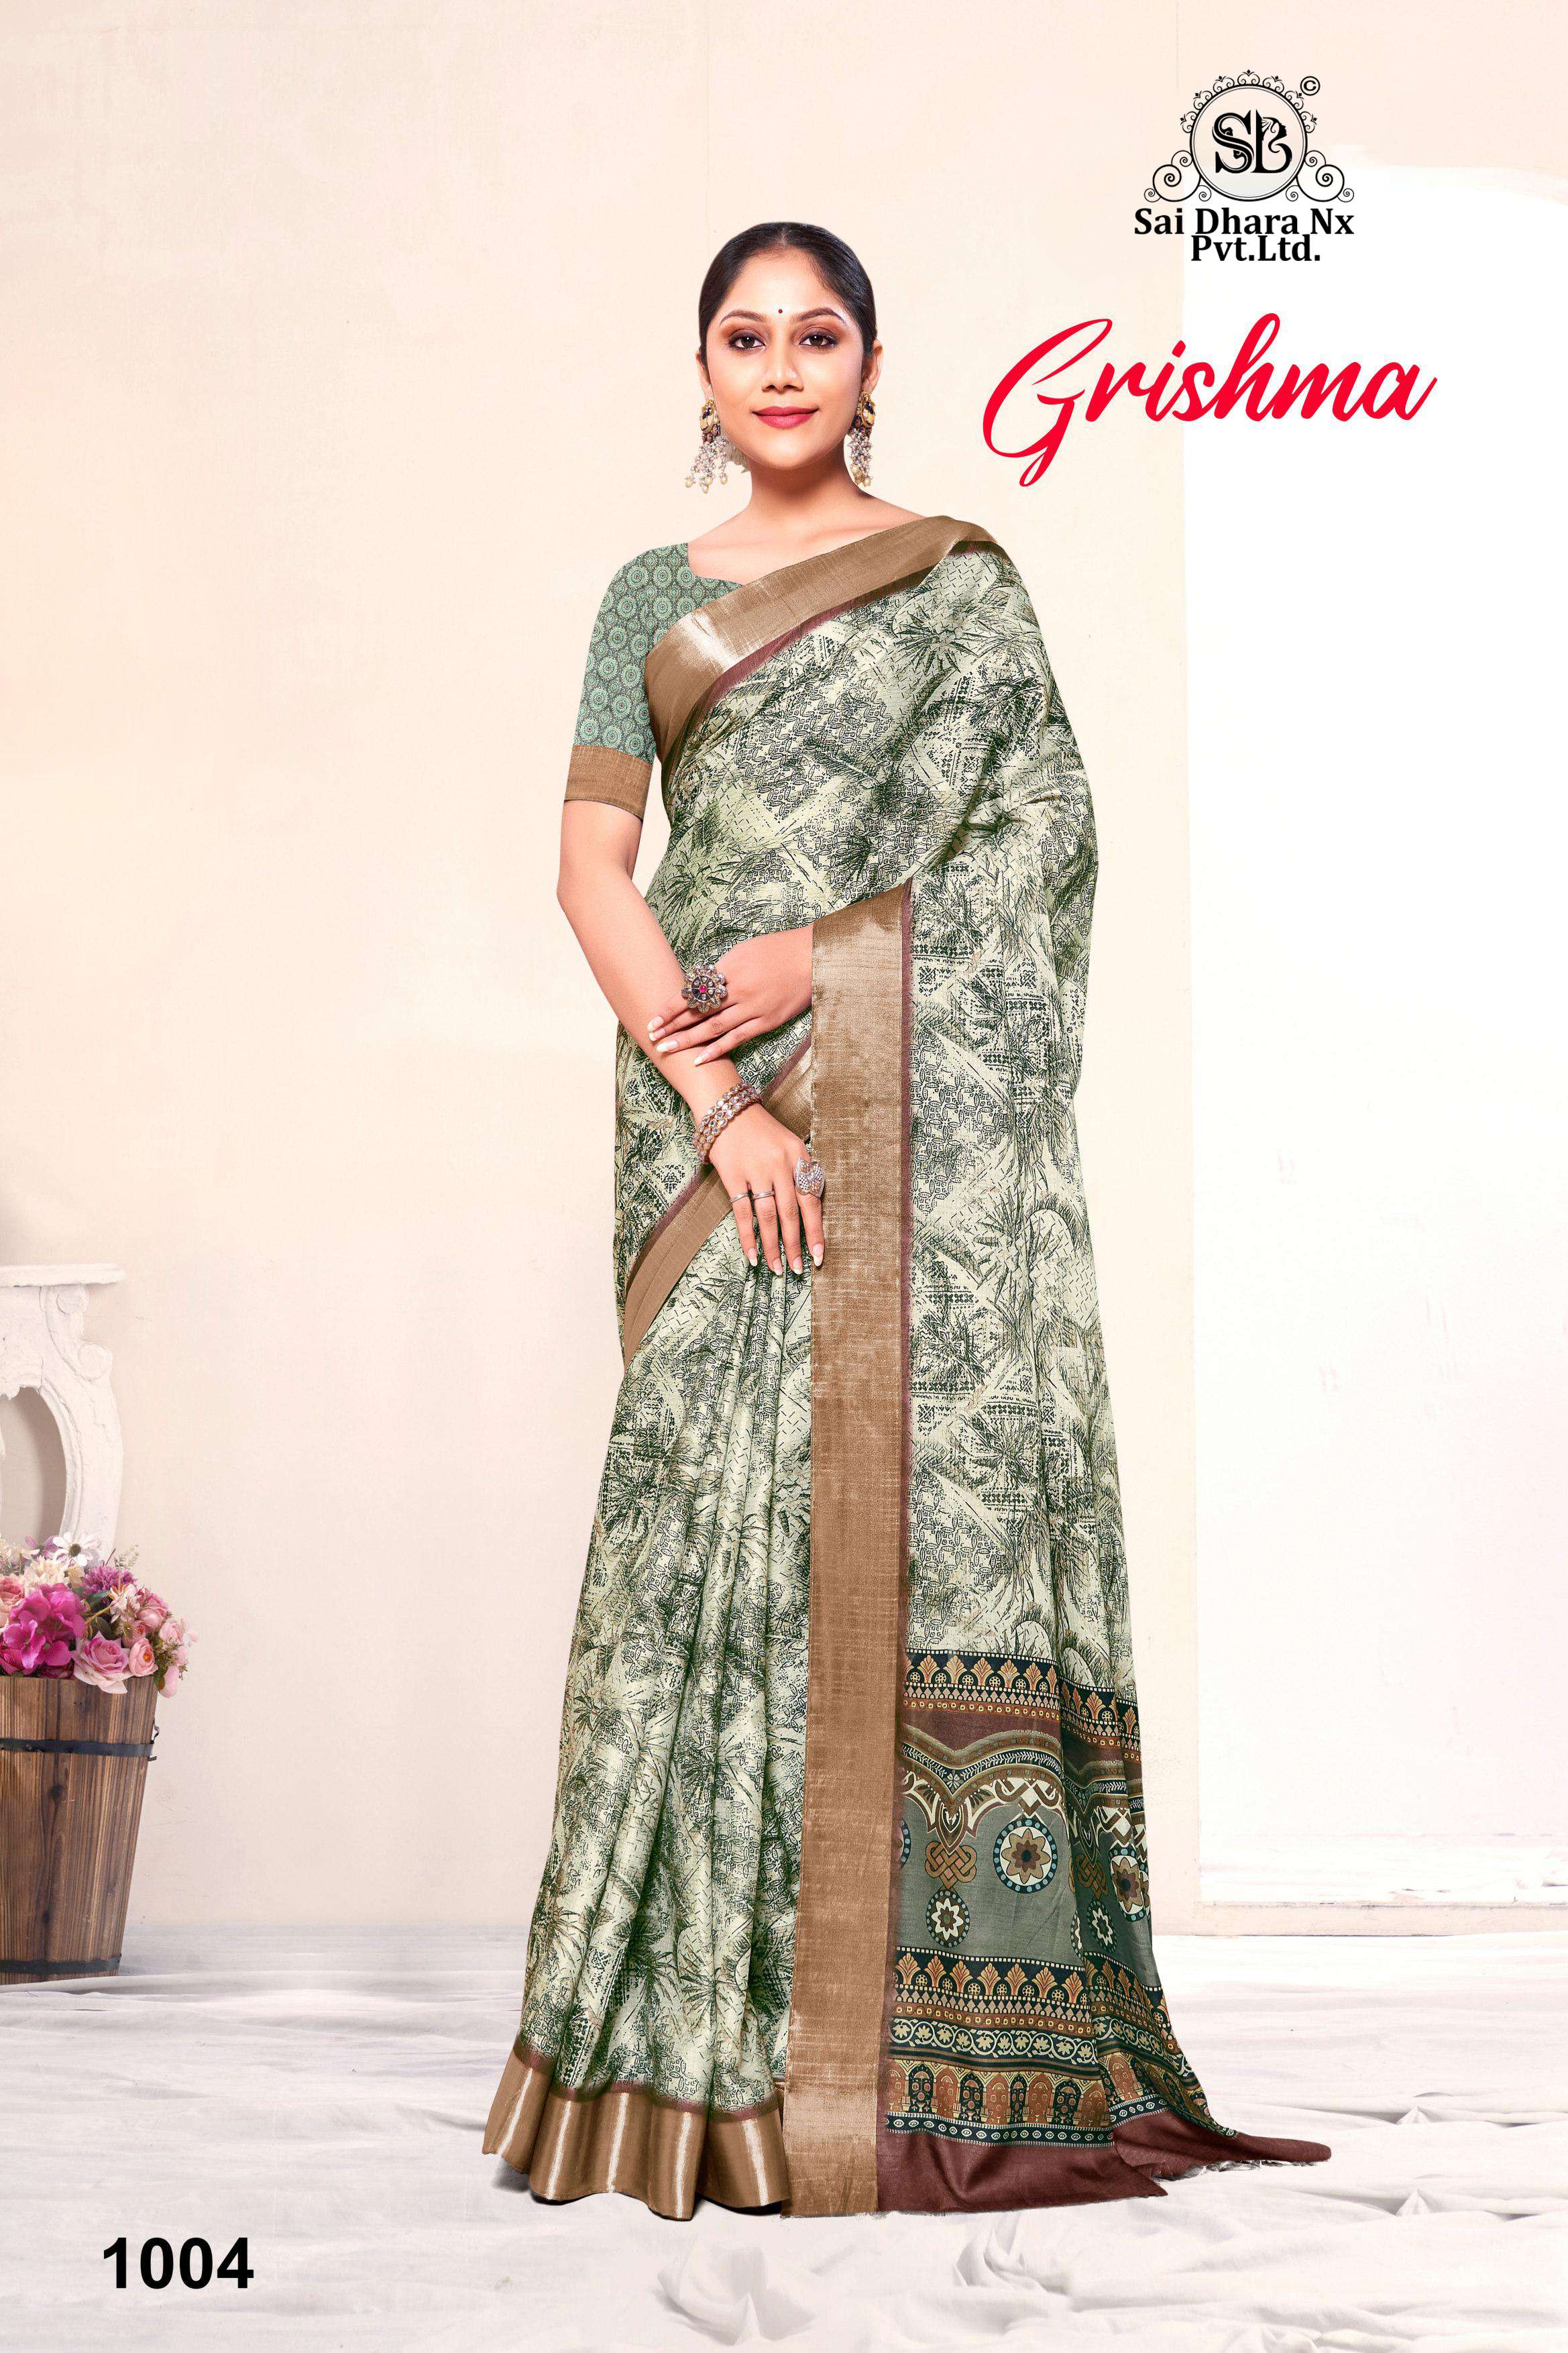 kashvi creation presents geecha silk prsents garishma saree wholesale shop in surat - SaiDharaNx